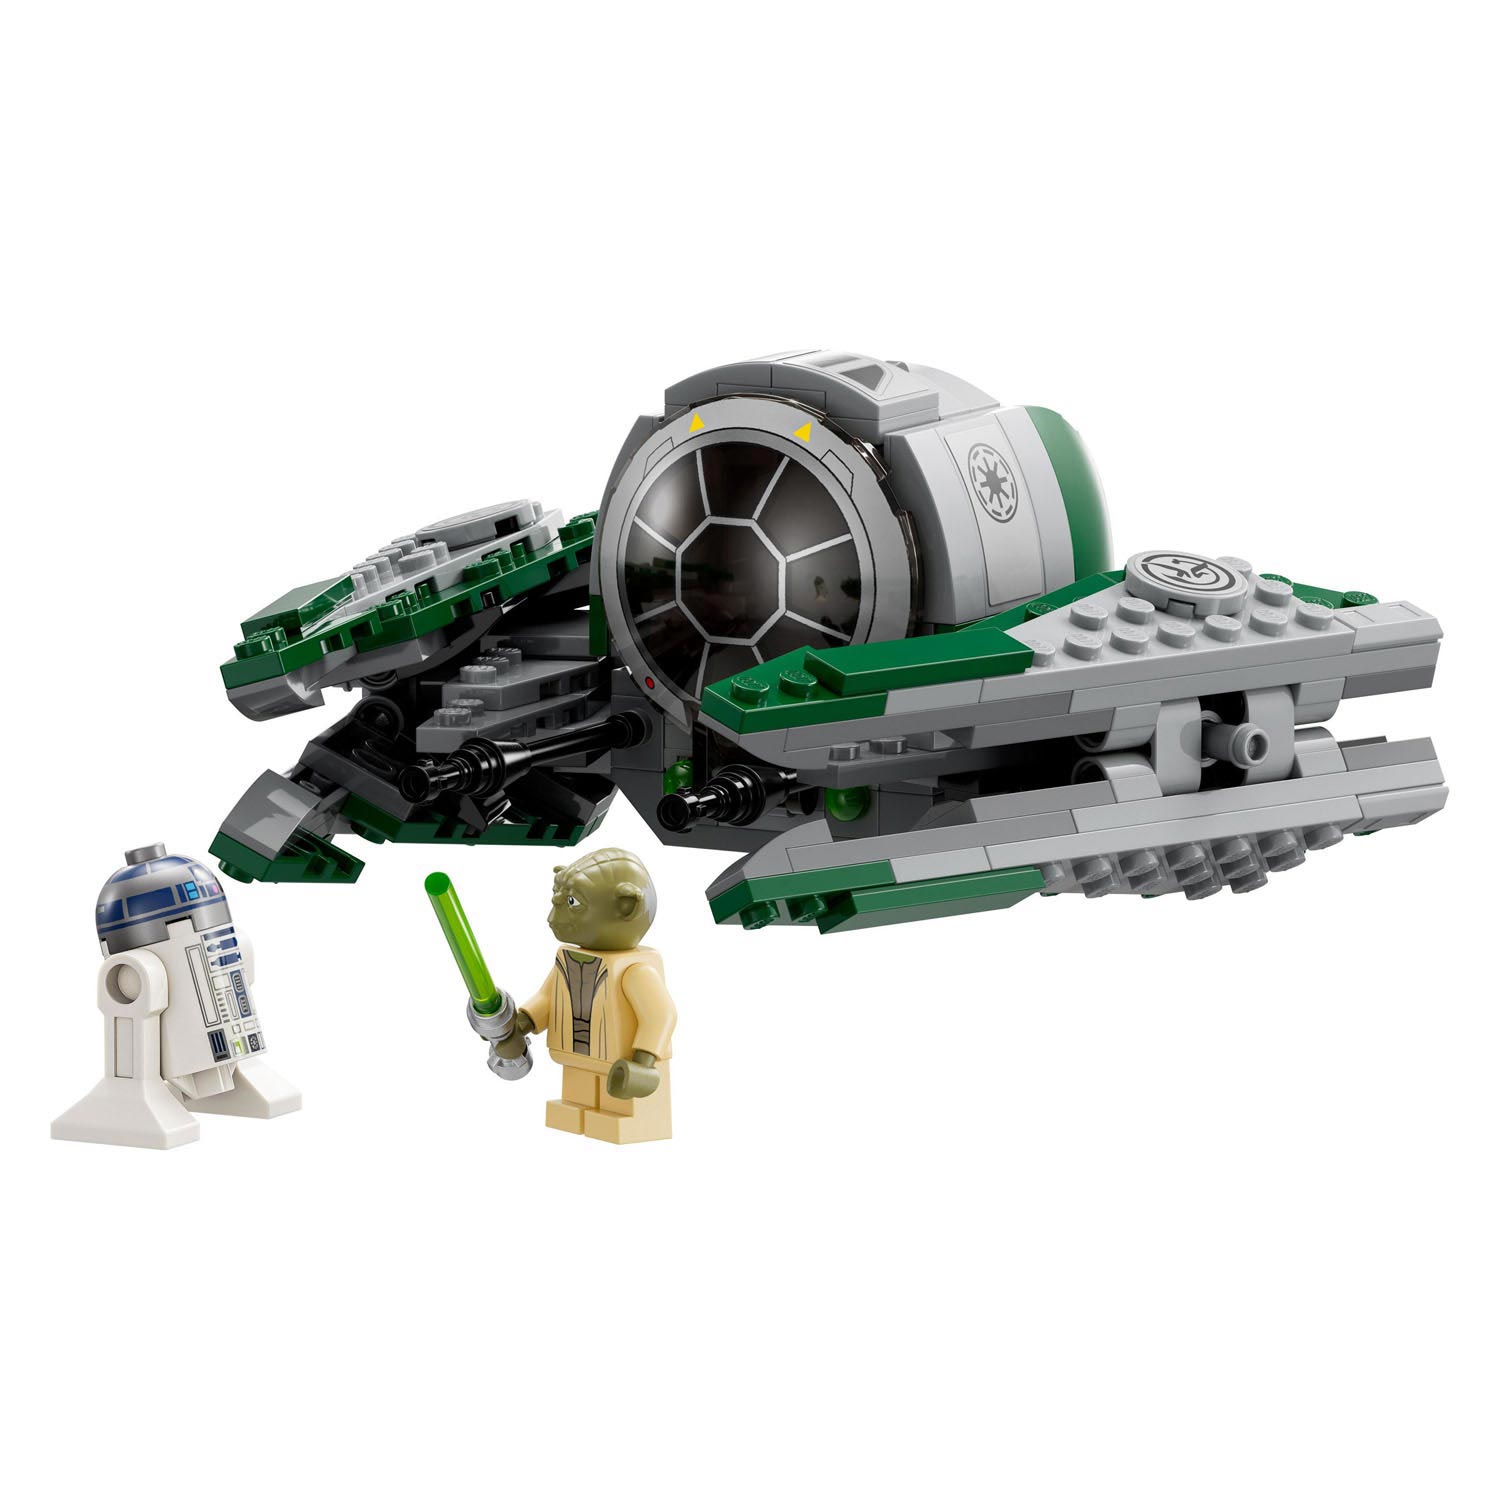 LEGO Star Wars 75360 Le chasseur Jedi de Yoda